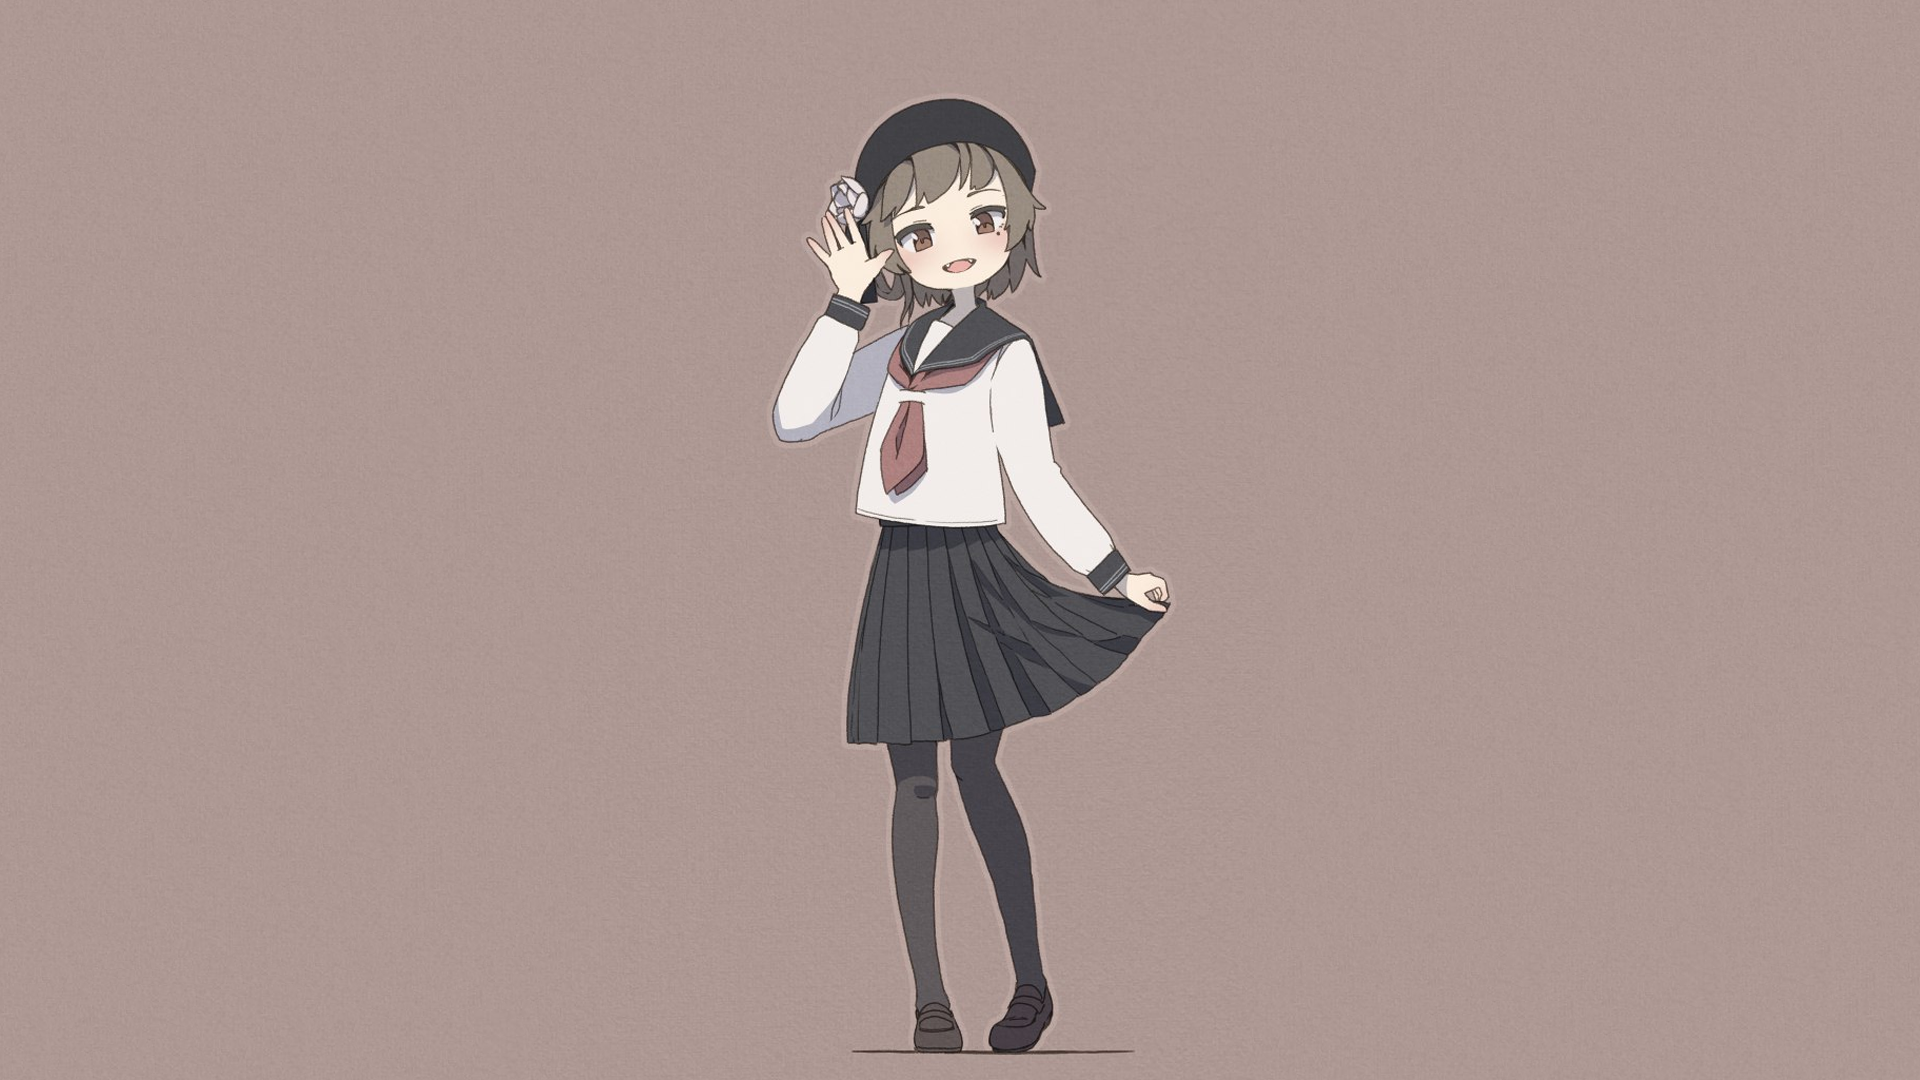 Wallpaper, manga, anime girls, simple background, brown background, sailor uniform, schoolgirl, kawaii girl 1920x1080